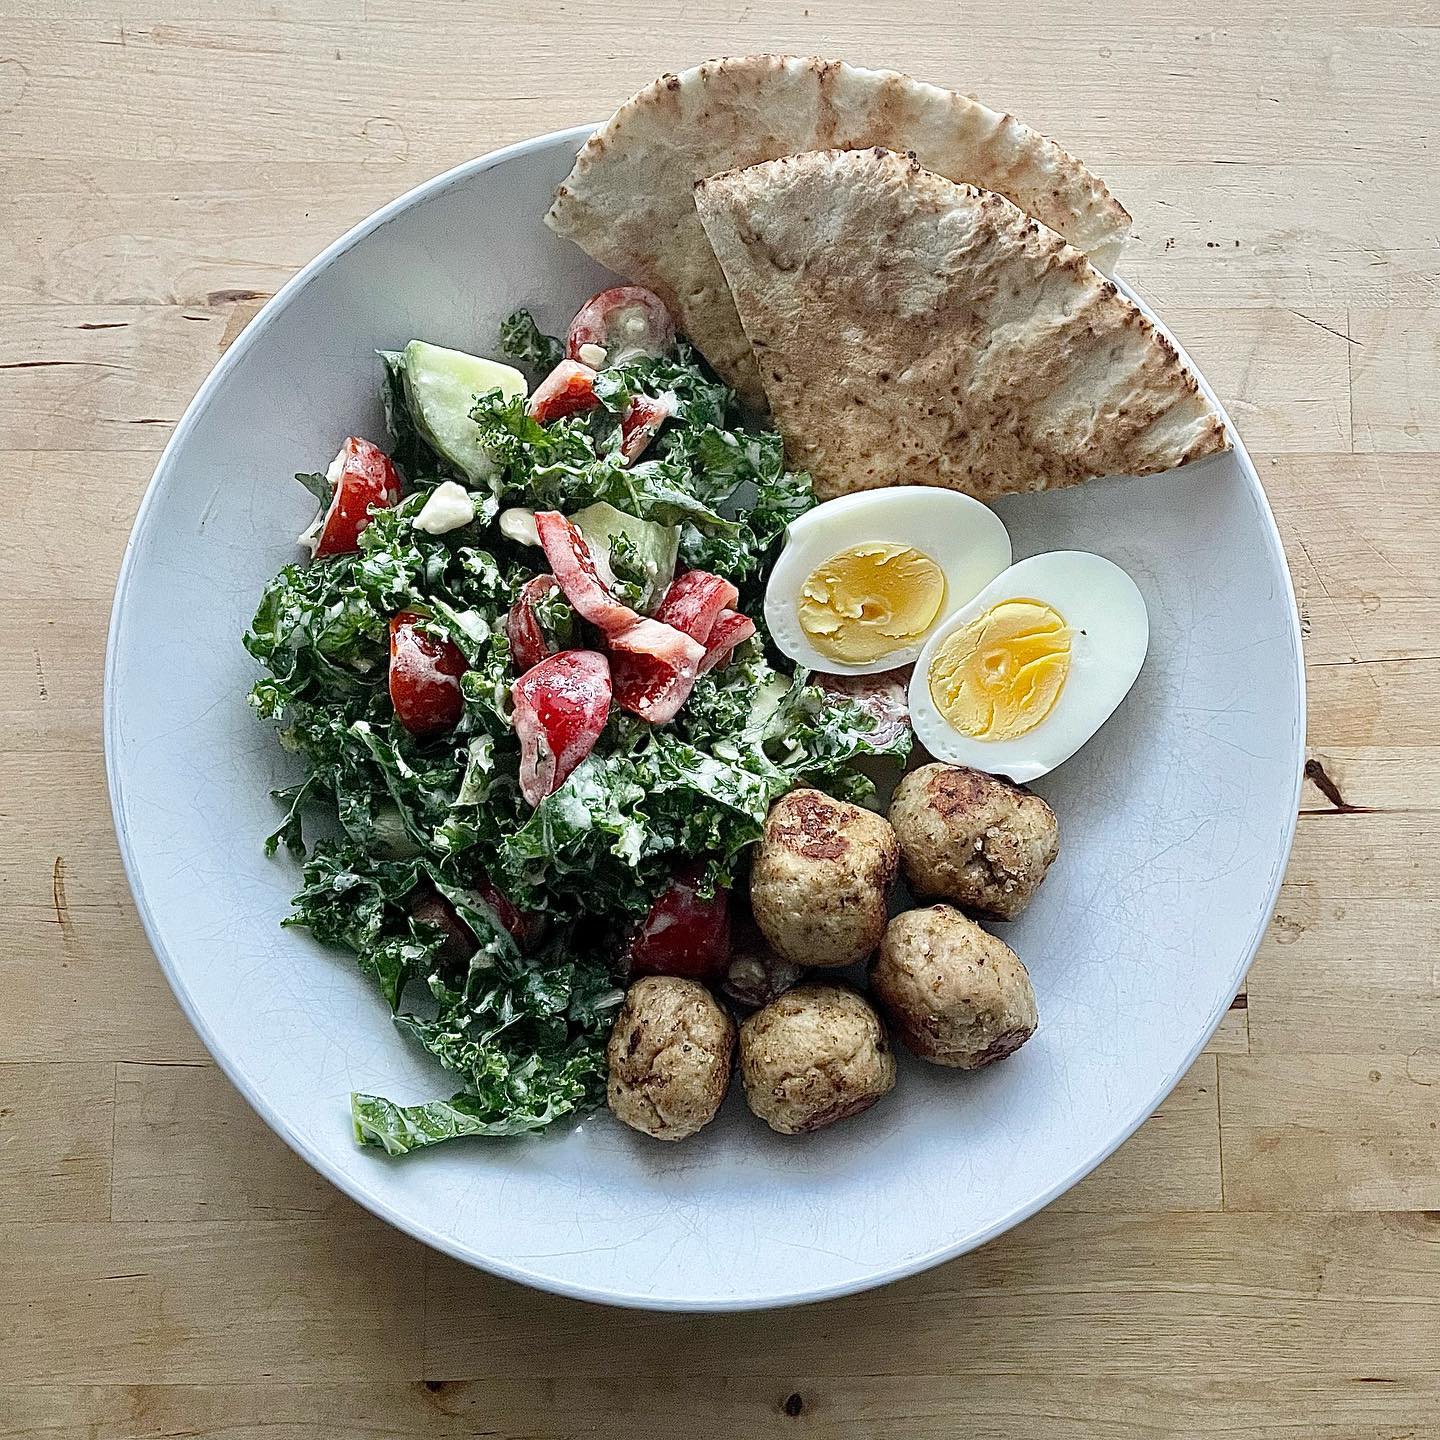 Recipe • Greek salad with kale and turkey meatballs 
.
Link in bio.
#ontheblog #recipes #kalesalad #greeksalad